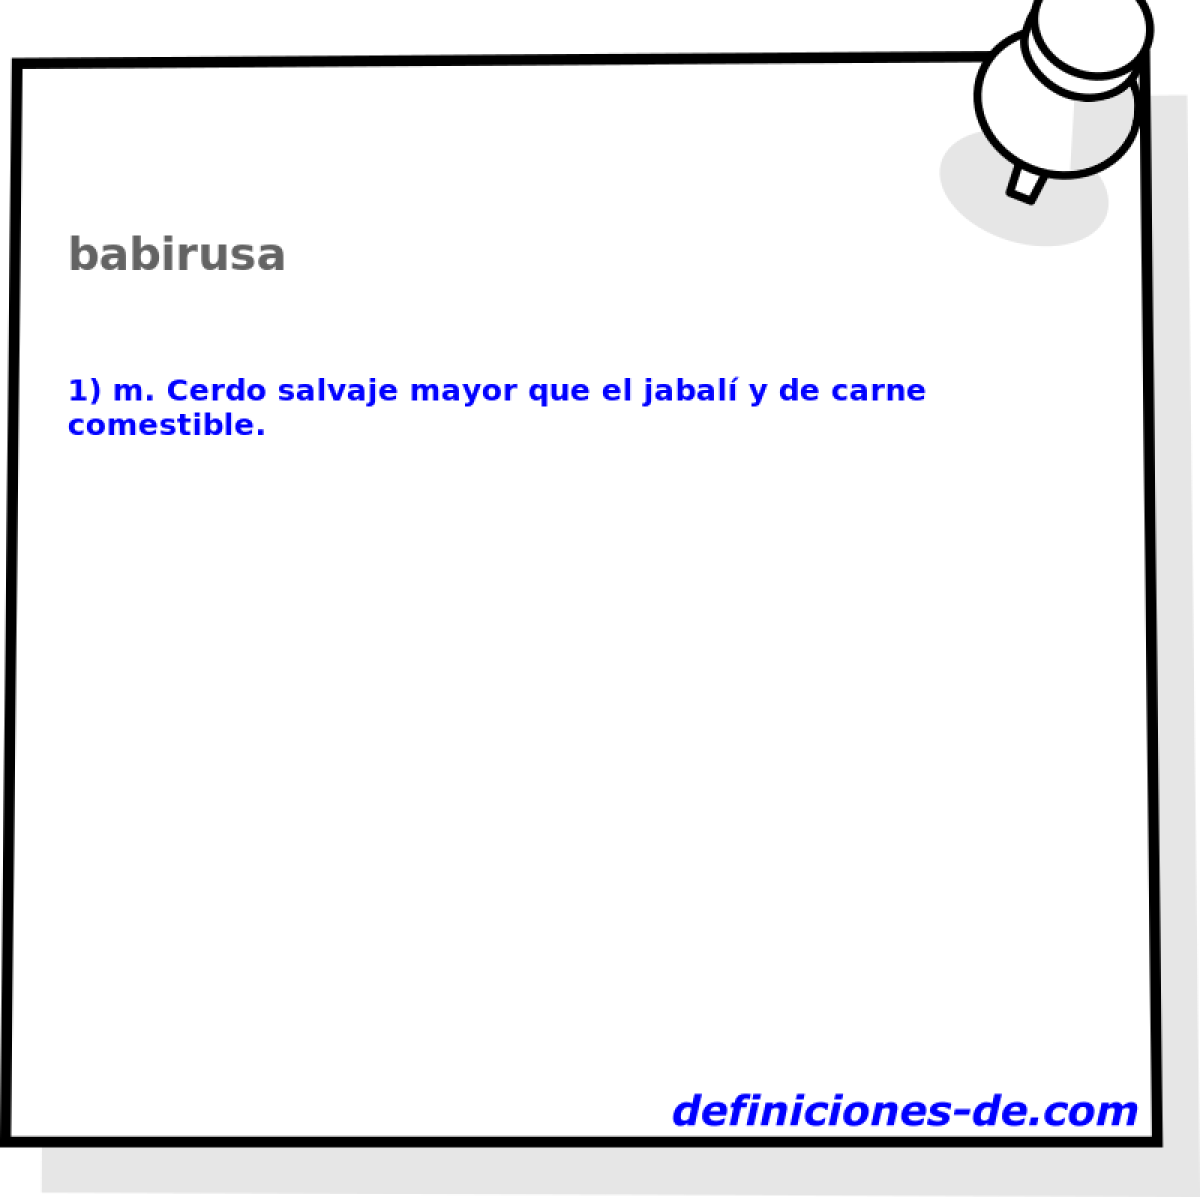 babirusa 